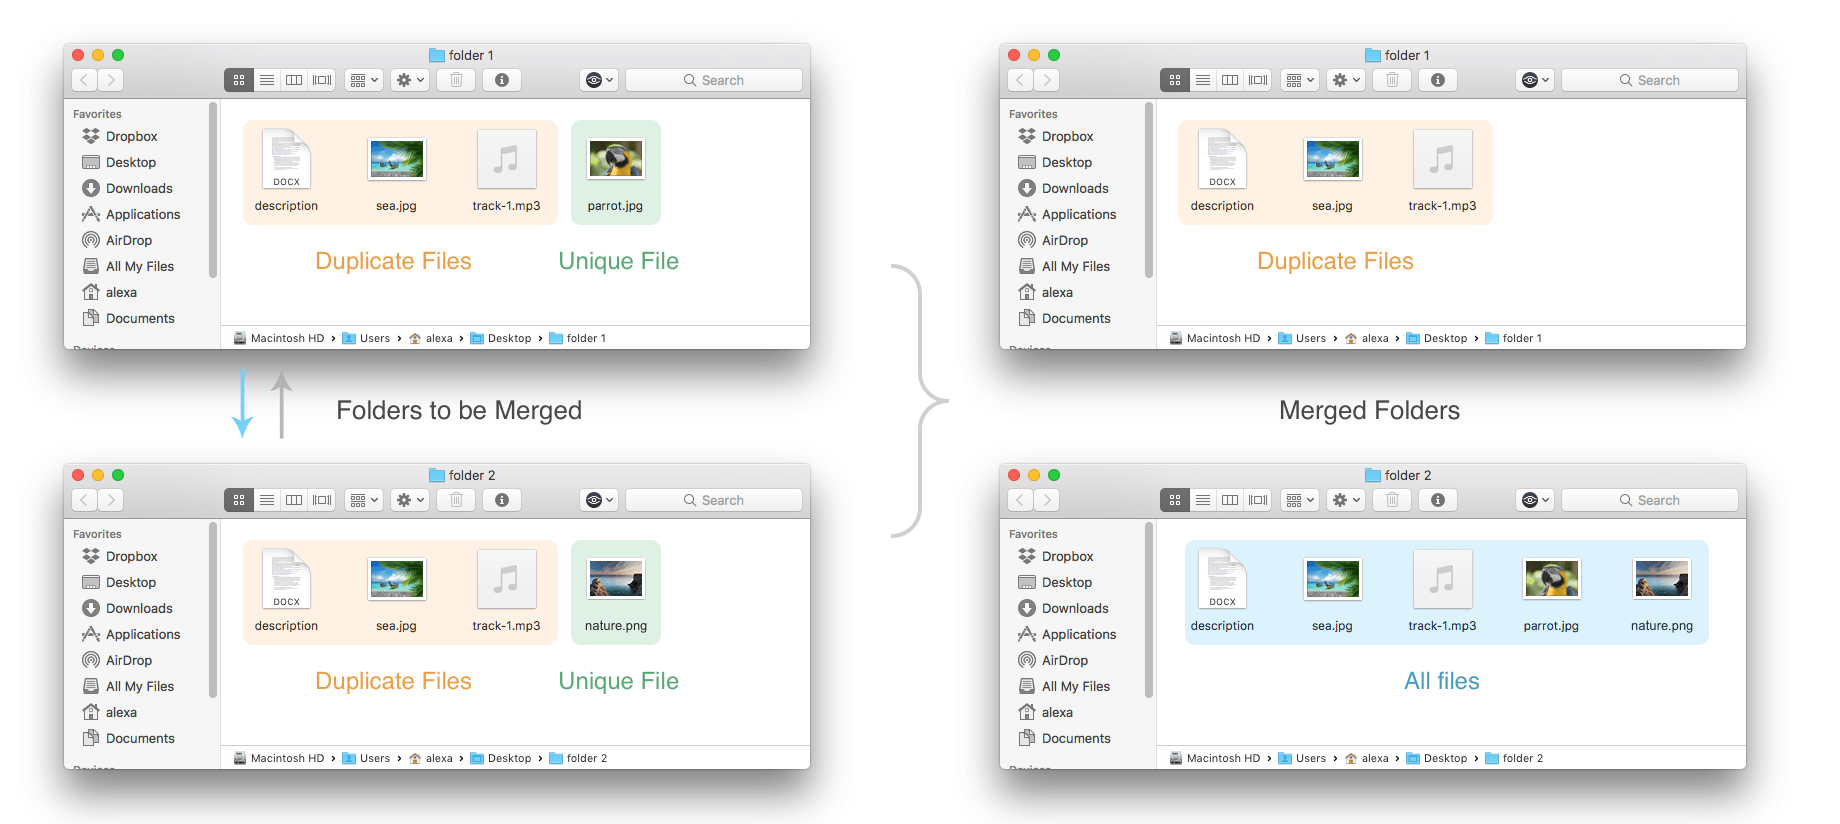 Finder windows showing moved files after merging folders